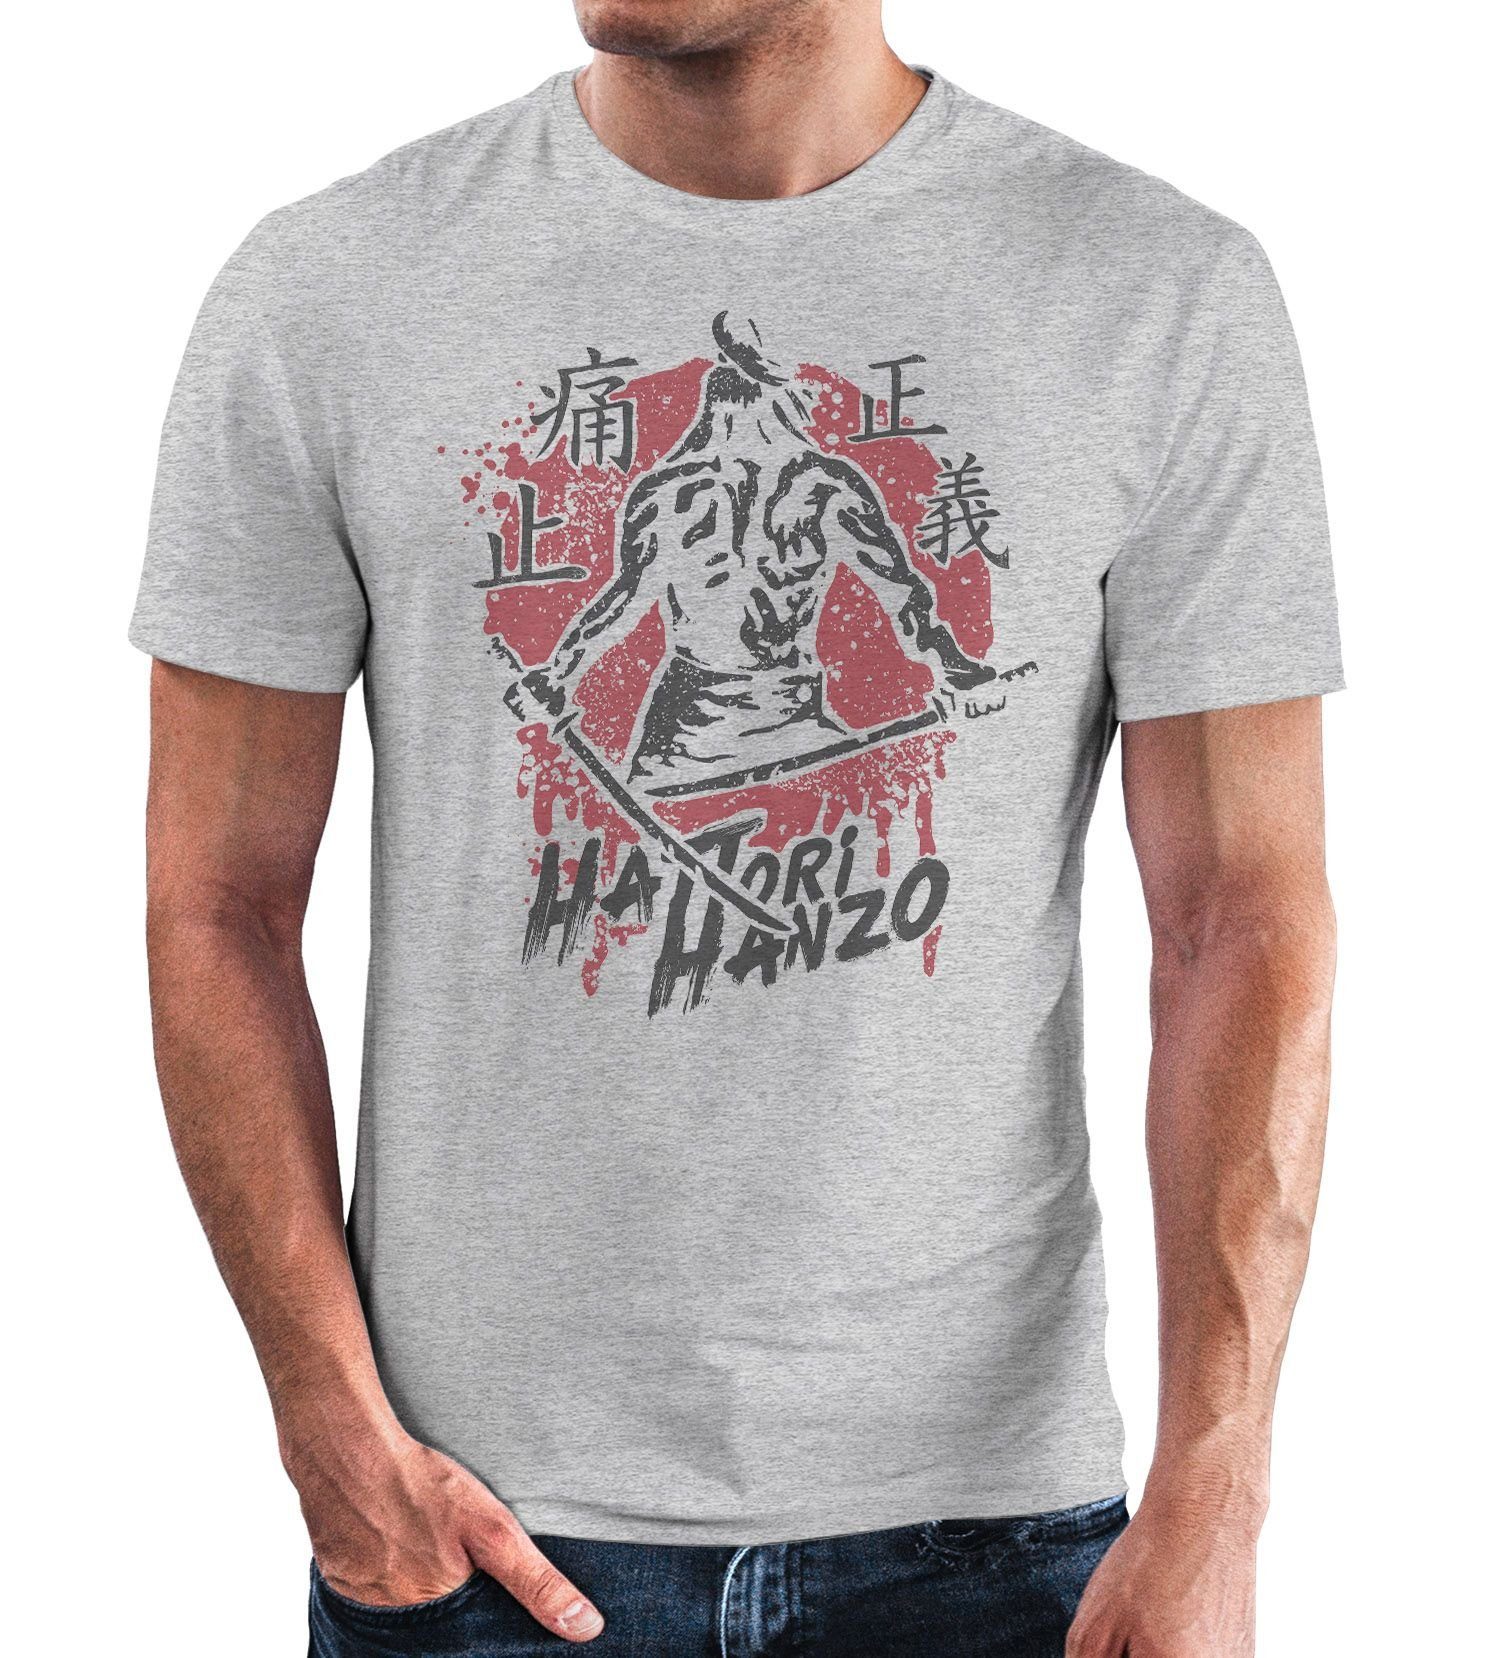 Neverless Print-Shirt Neverless® Herren T-Shirt Samurai japanische Schriftzeichen Schriftzug Hattori Hanzo Fashion Streetstyle mit Print grau